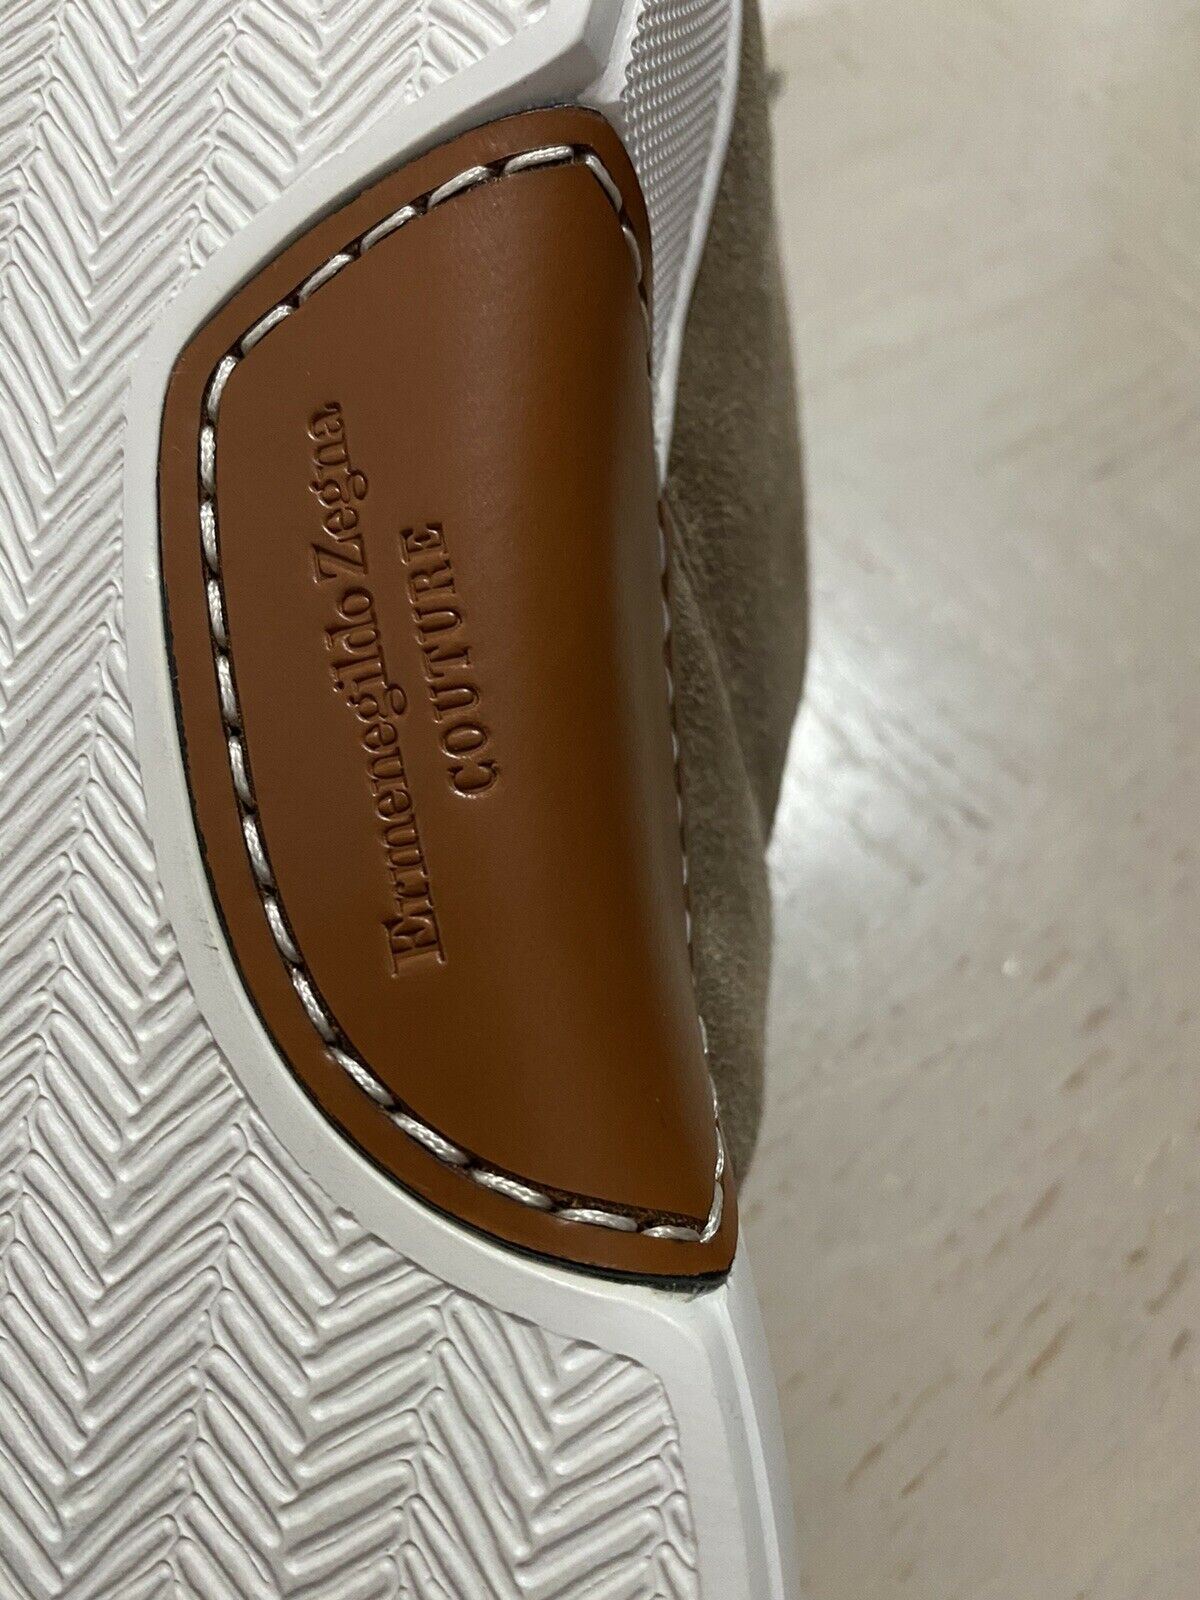 Neue $850 Ermenegildo Zegna Couture Wildleder/Leder Sneakers Schuhe LT Brown 9 US